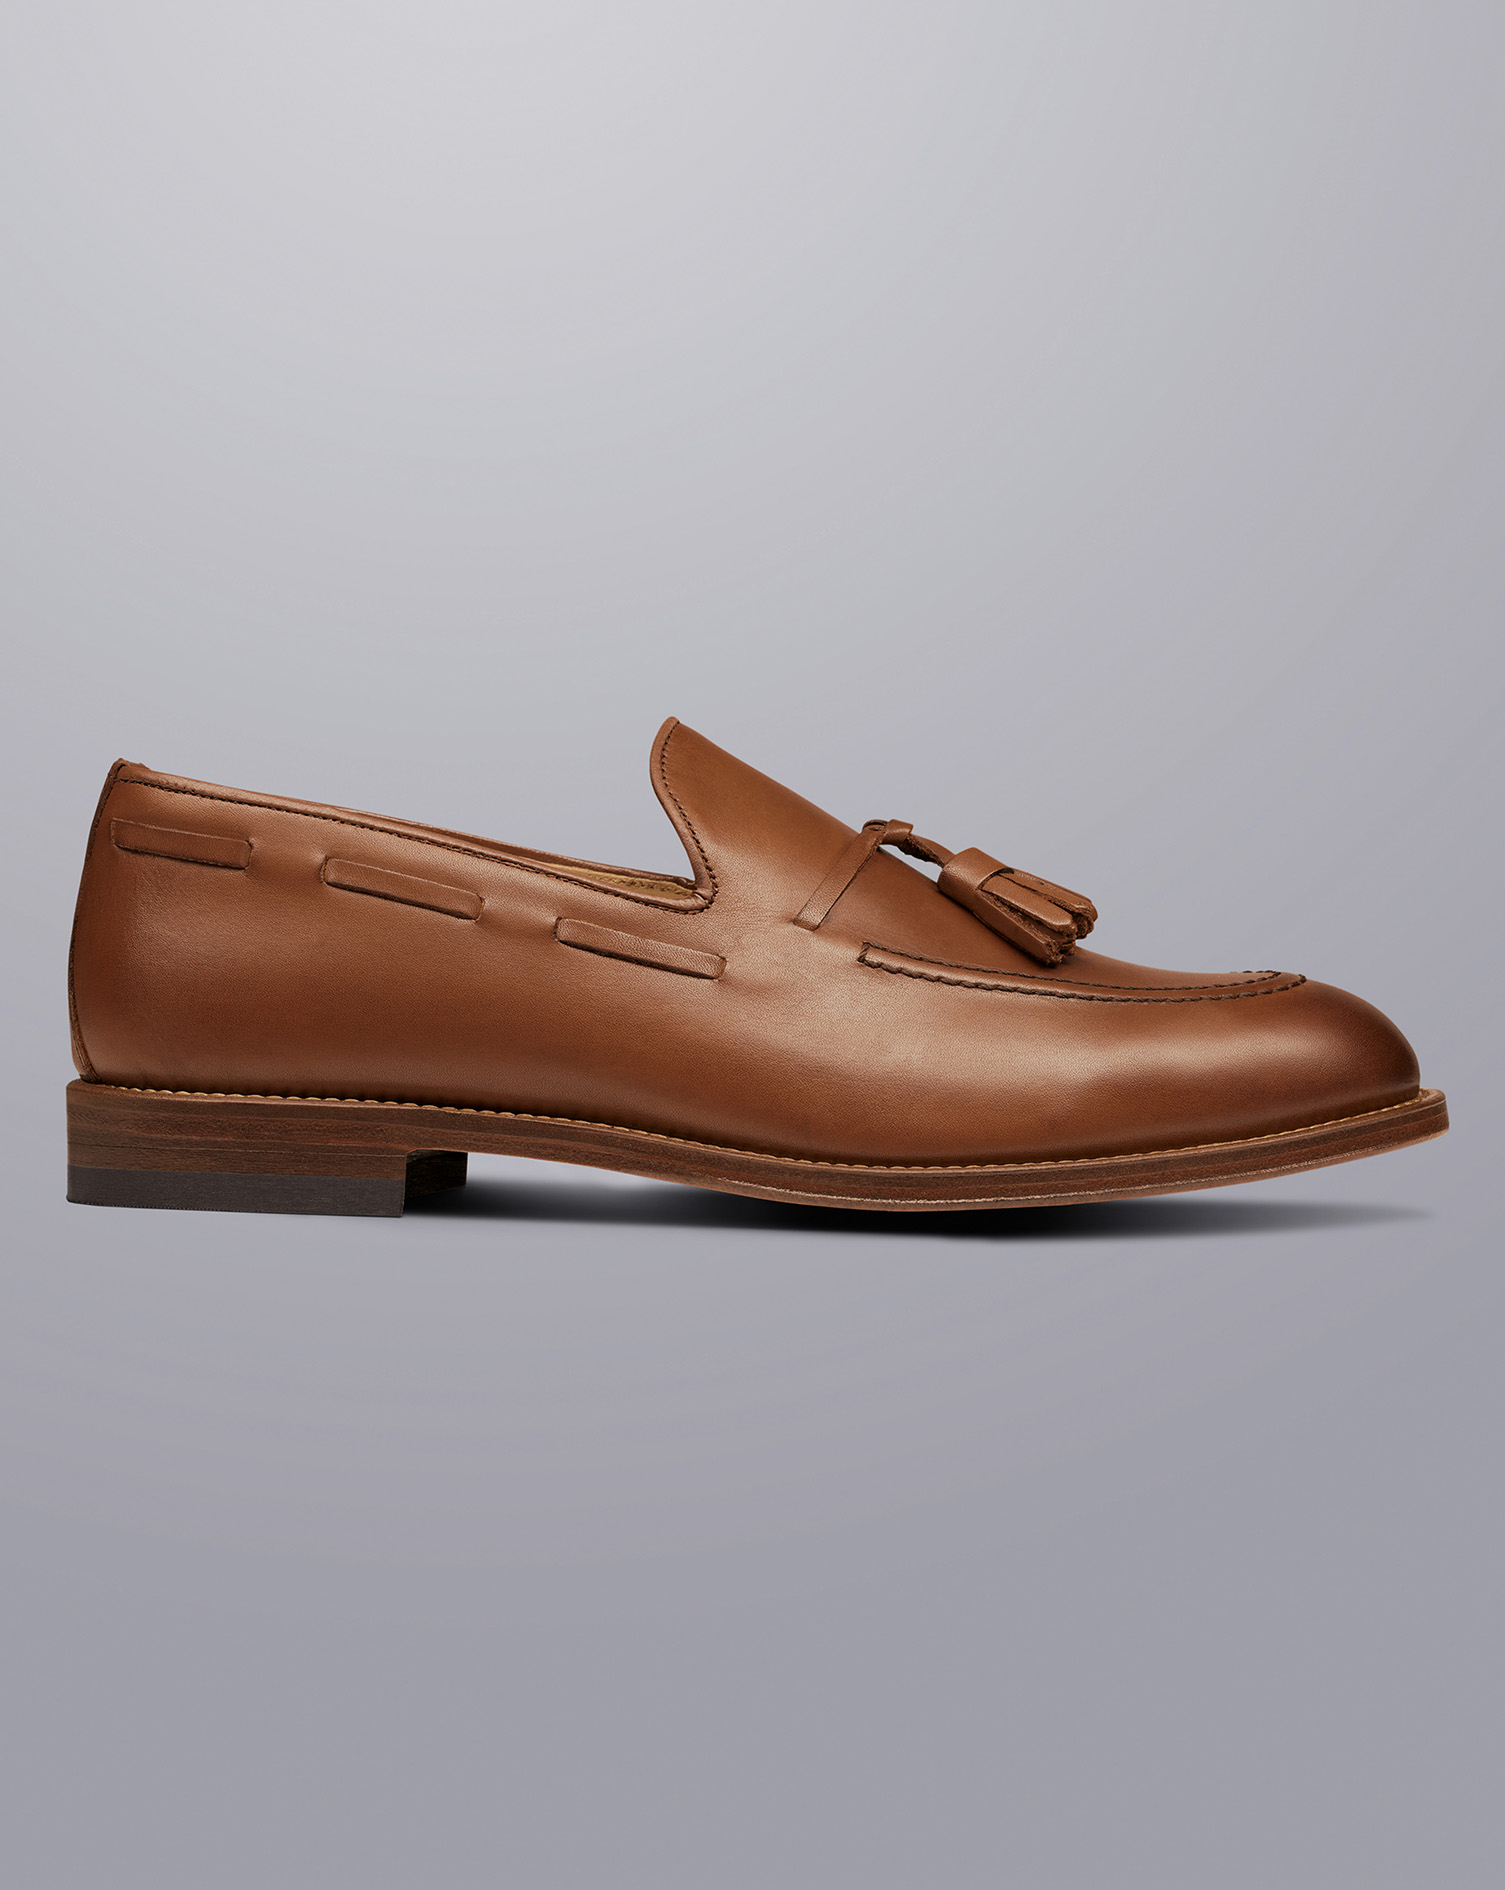 Men's Charles Tyrwhitt Leather Tassel Loafers - Walnut Brown Size 10
